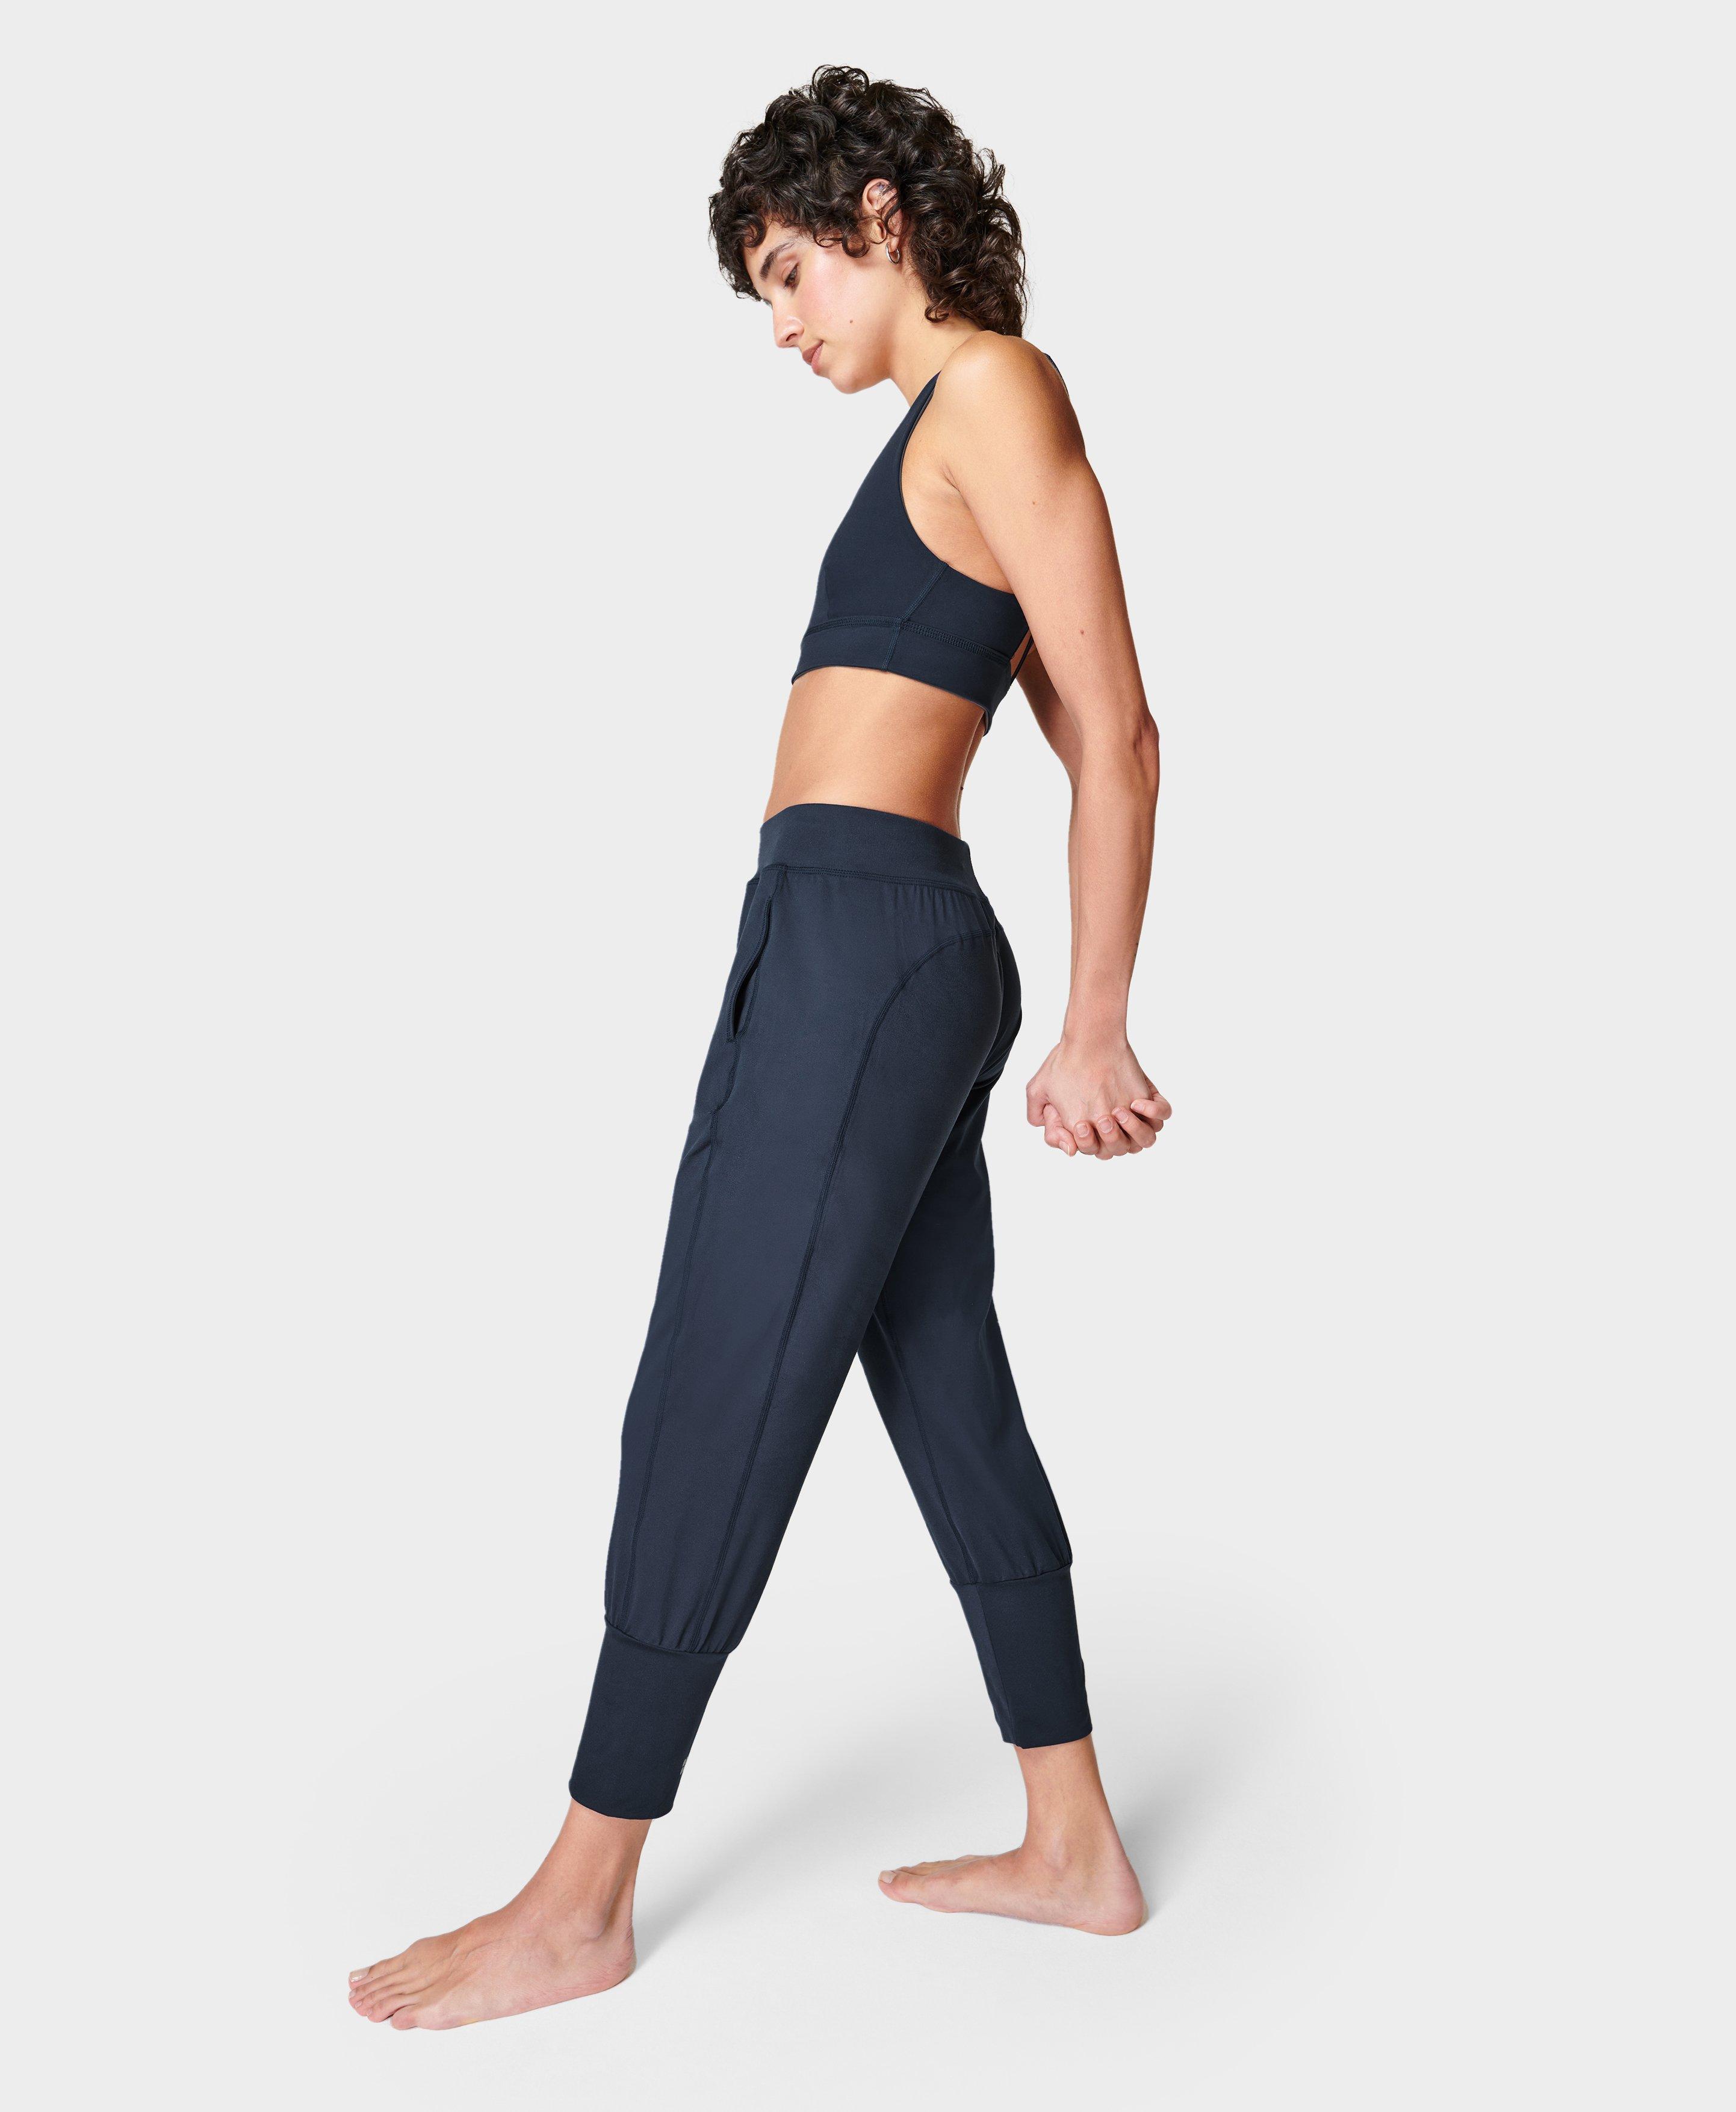 Women's Cropped Yoga Pants/Capris- Organic Cotton/Bamboo Stretch